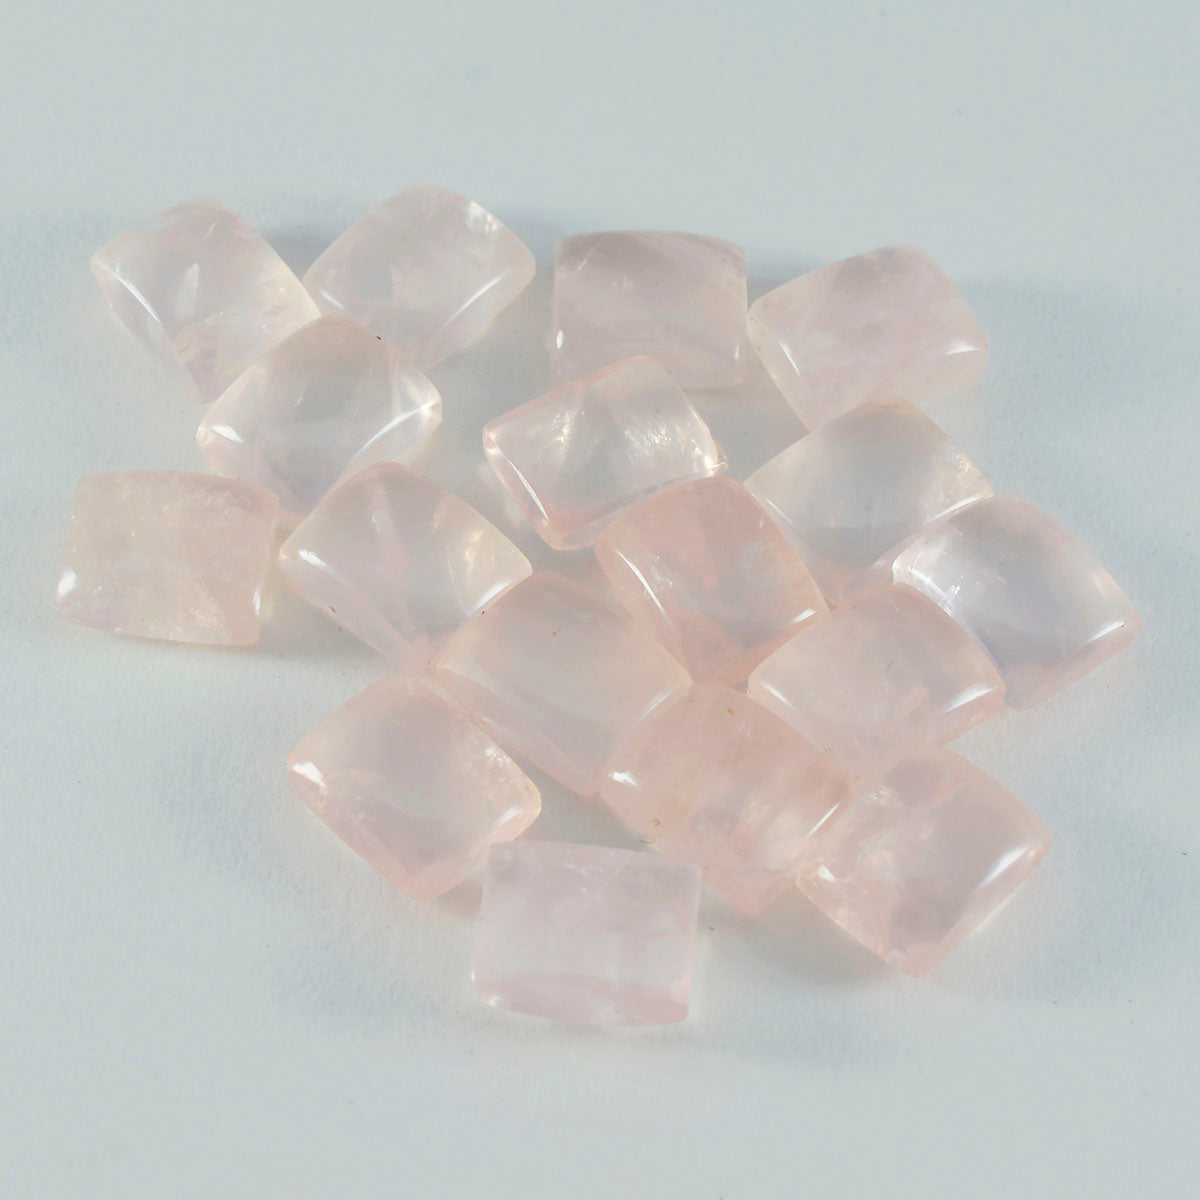 Riyogems 1PC roze rozenkwarts cabochon 8x10 mm achthoekige vorm knappe kwaliteit edelsteen